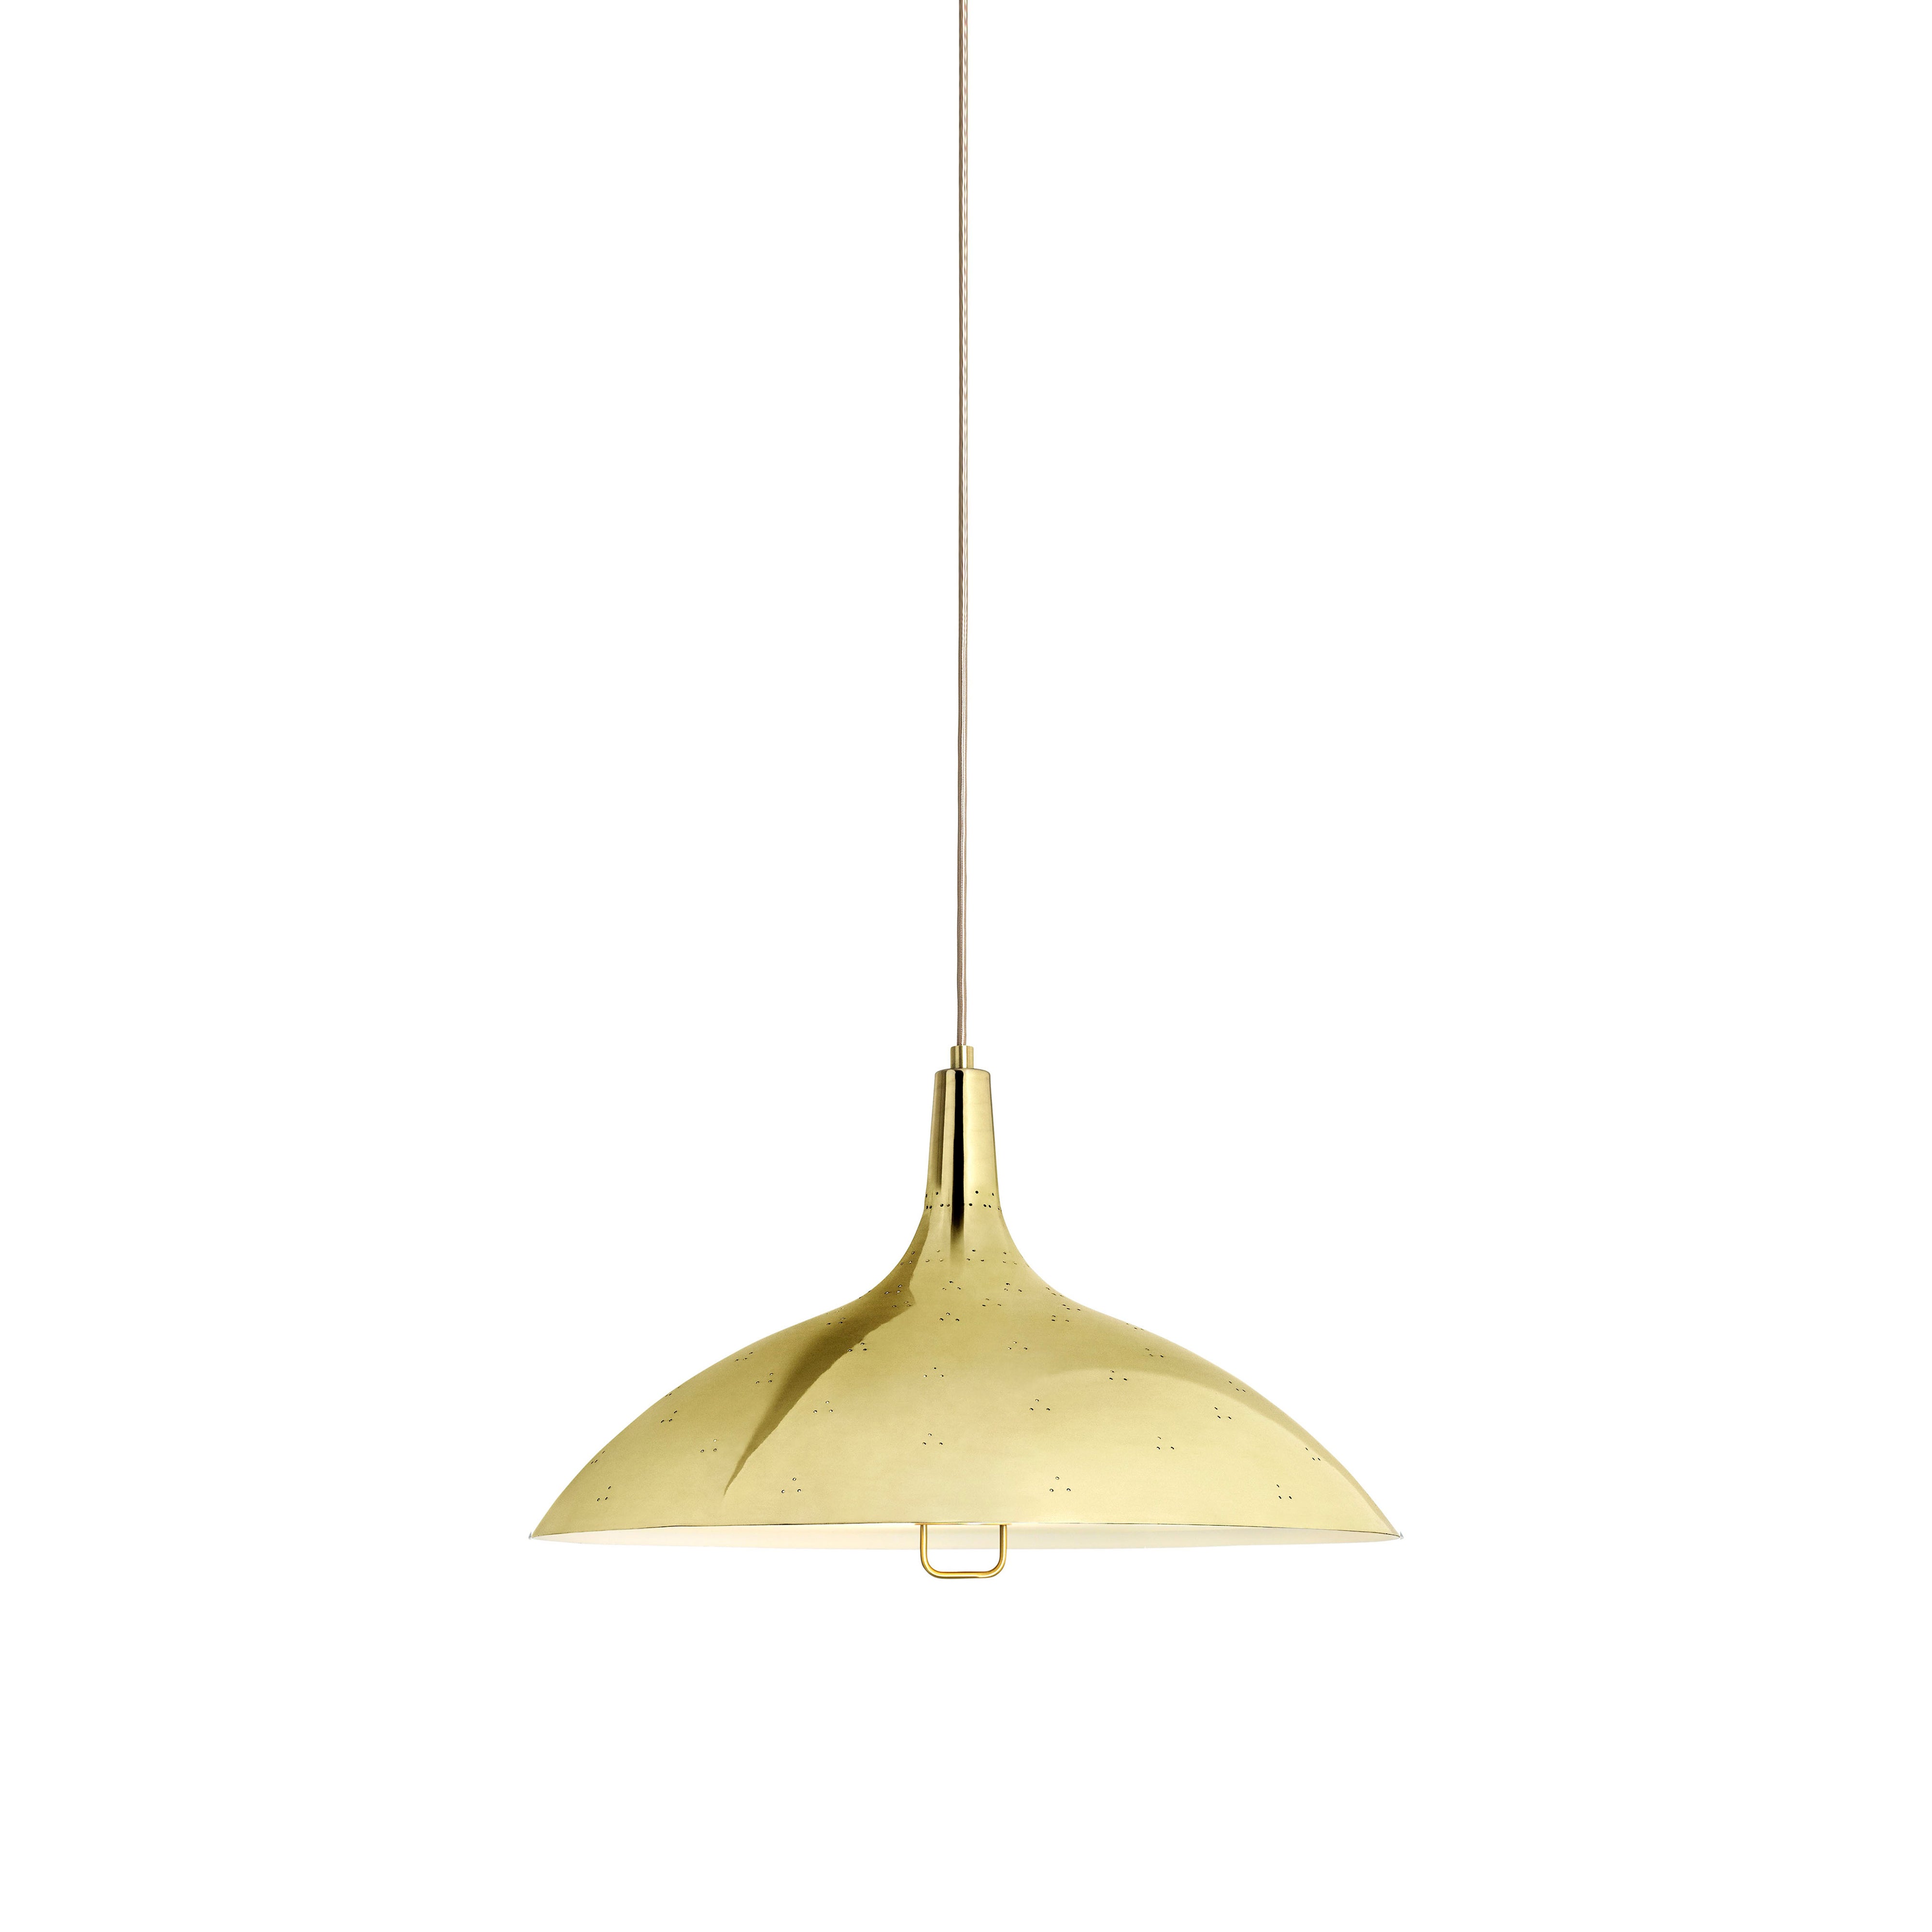 1965 Pendant Lamp: Polished Brass